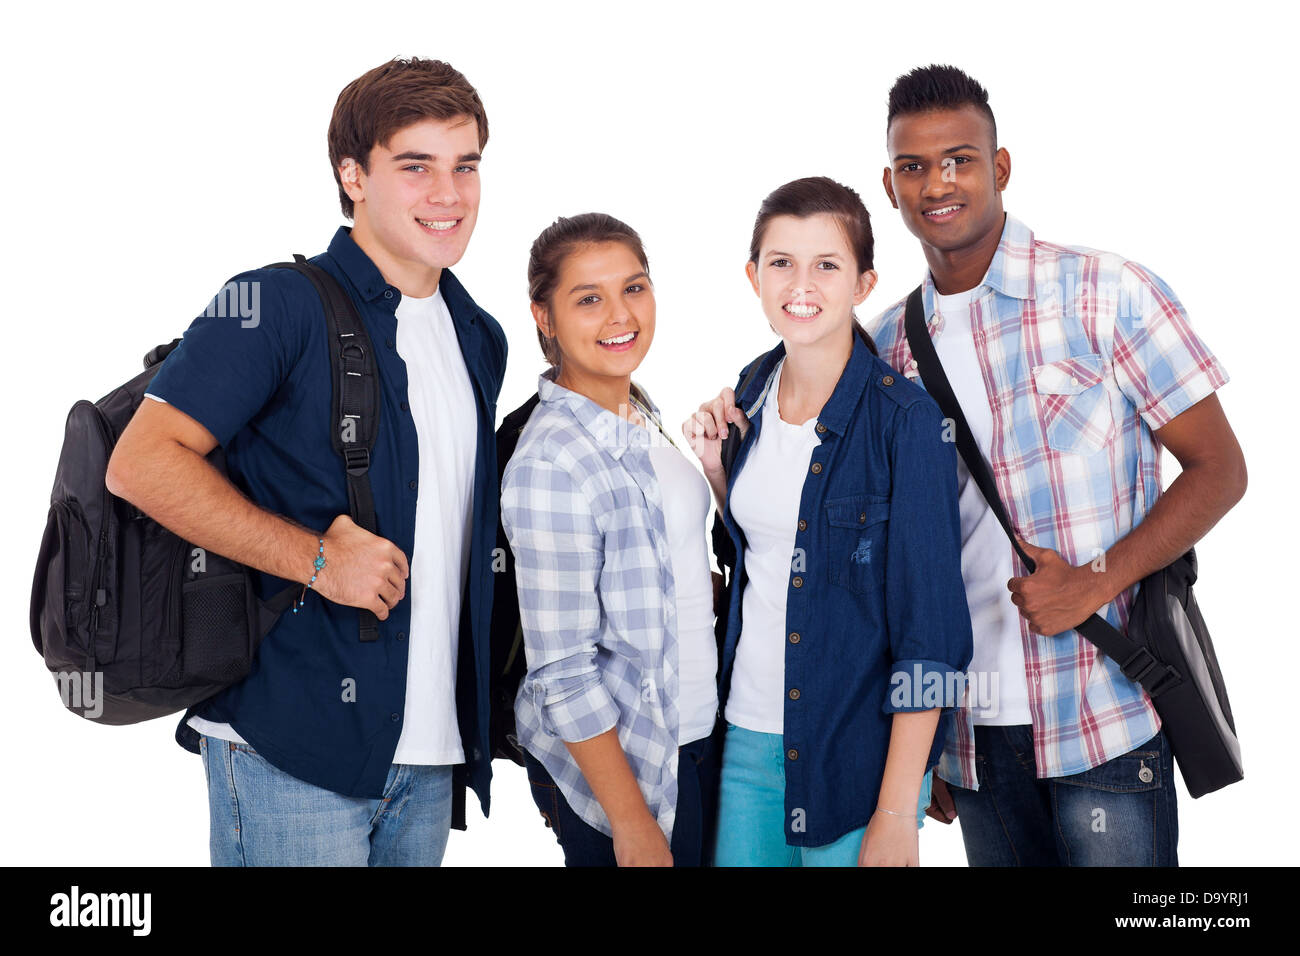 diversity group of teenage boys and girls isolated on white background Stock Photo